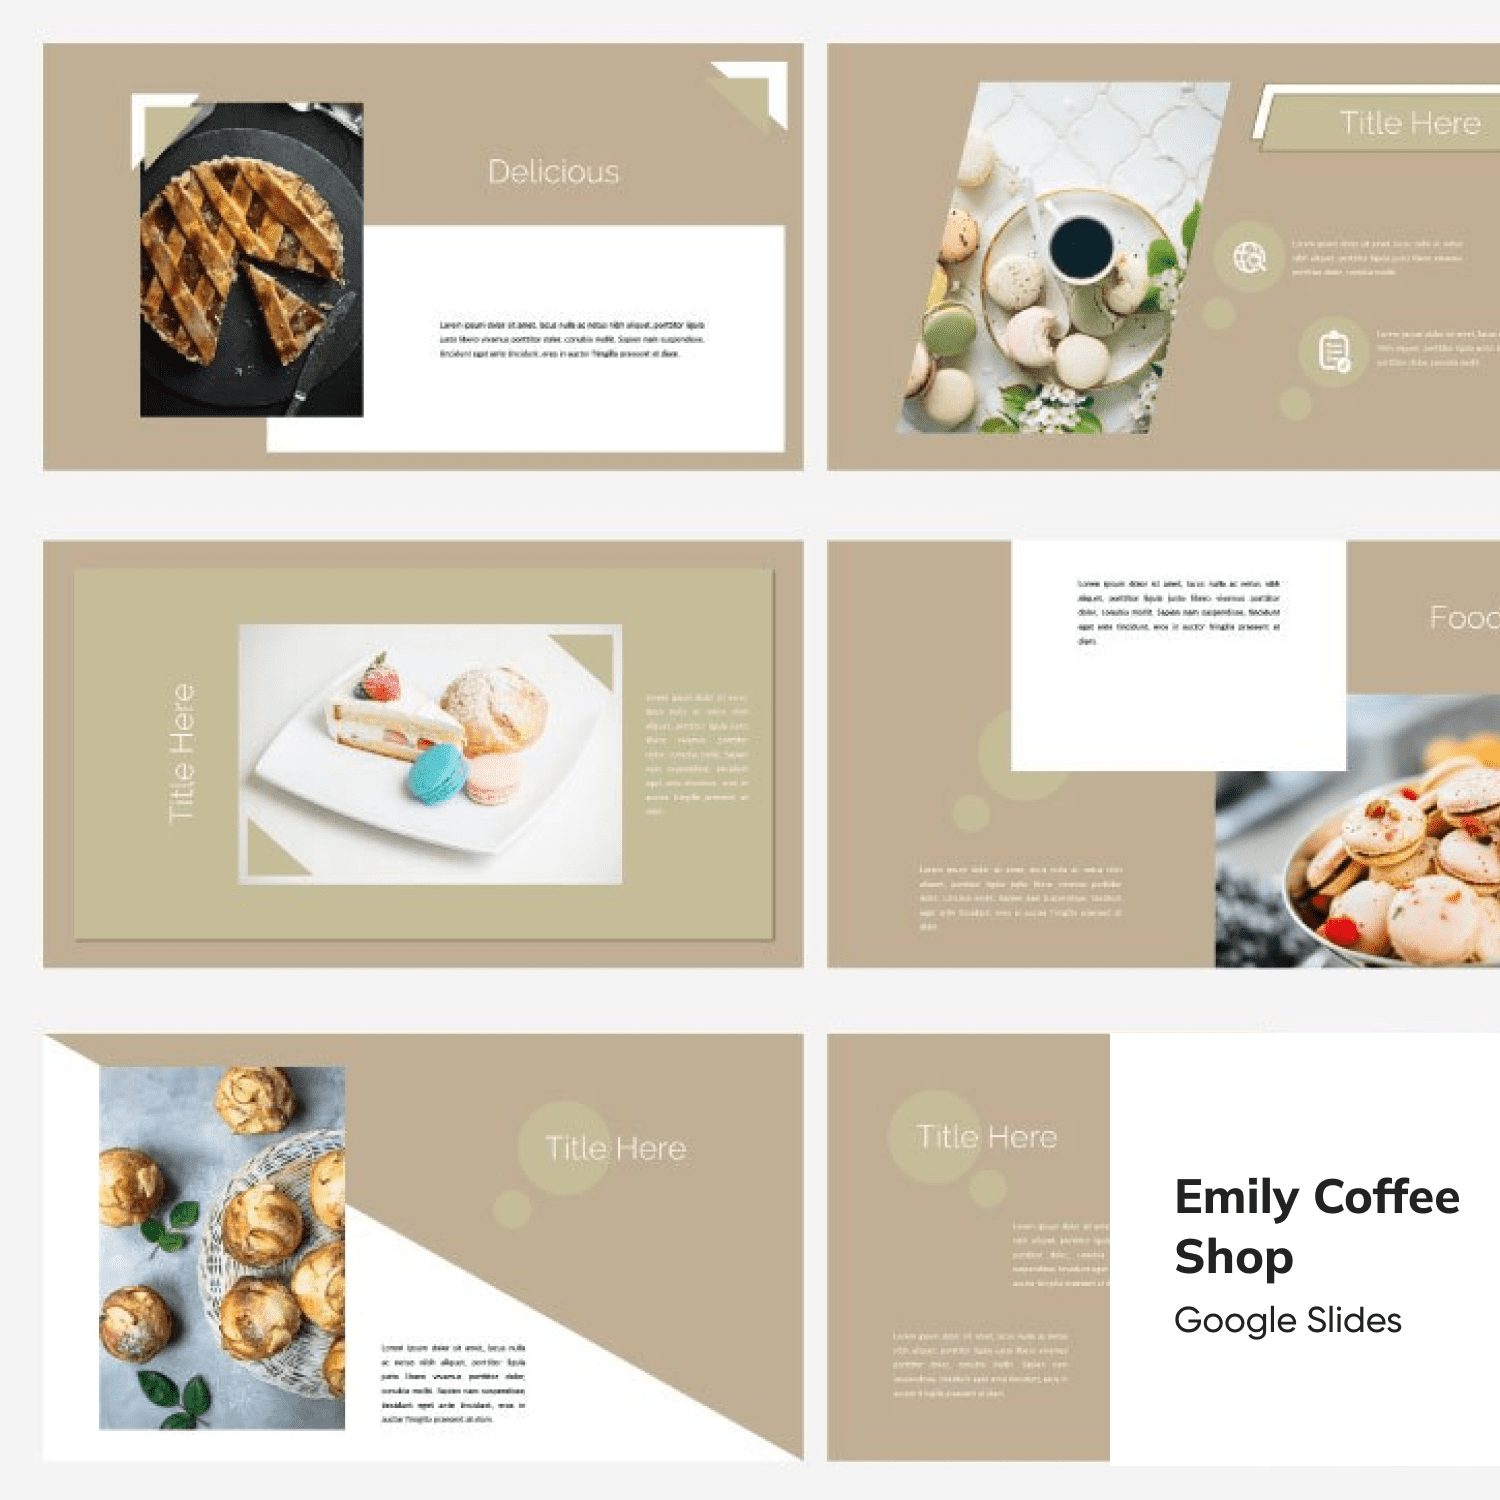 Emily Coffee Shop - Google Slides cover.